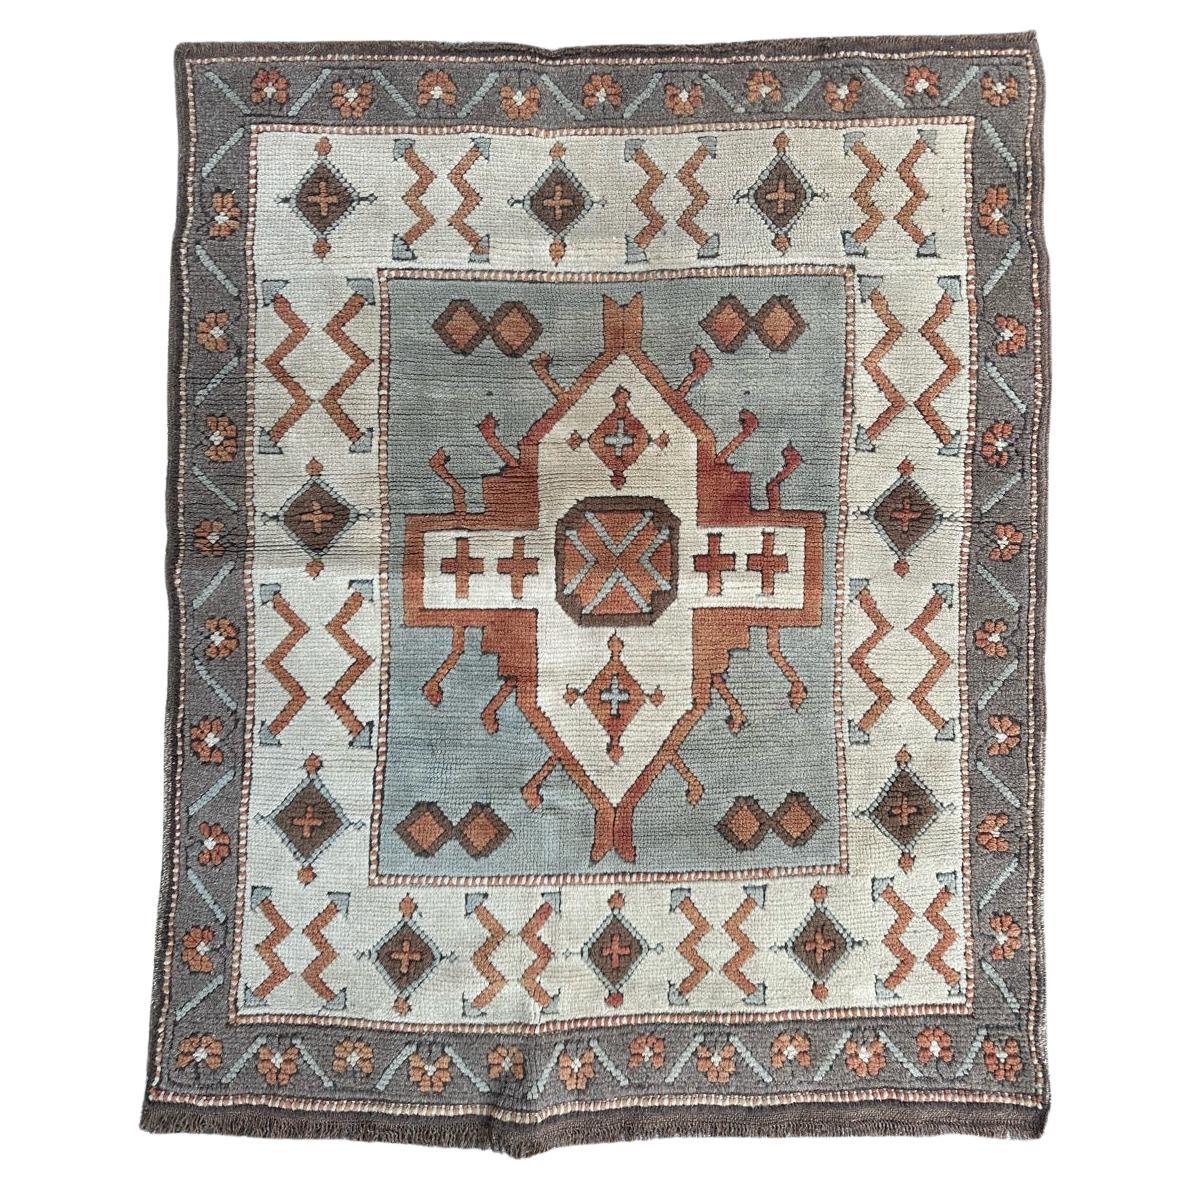 Bobyrug’s nice vintage Turkish rug For Sale